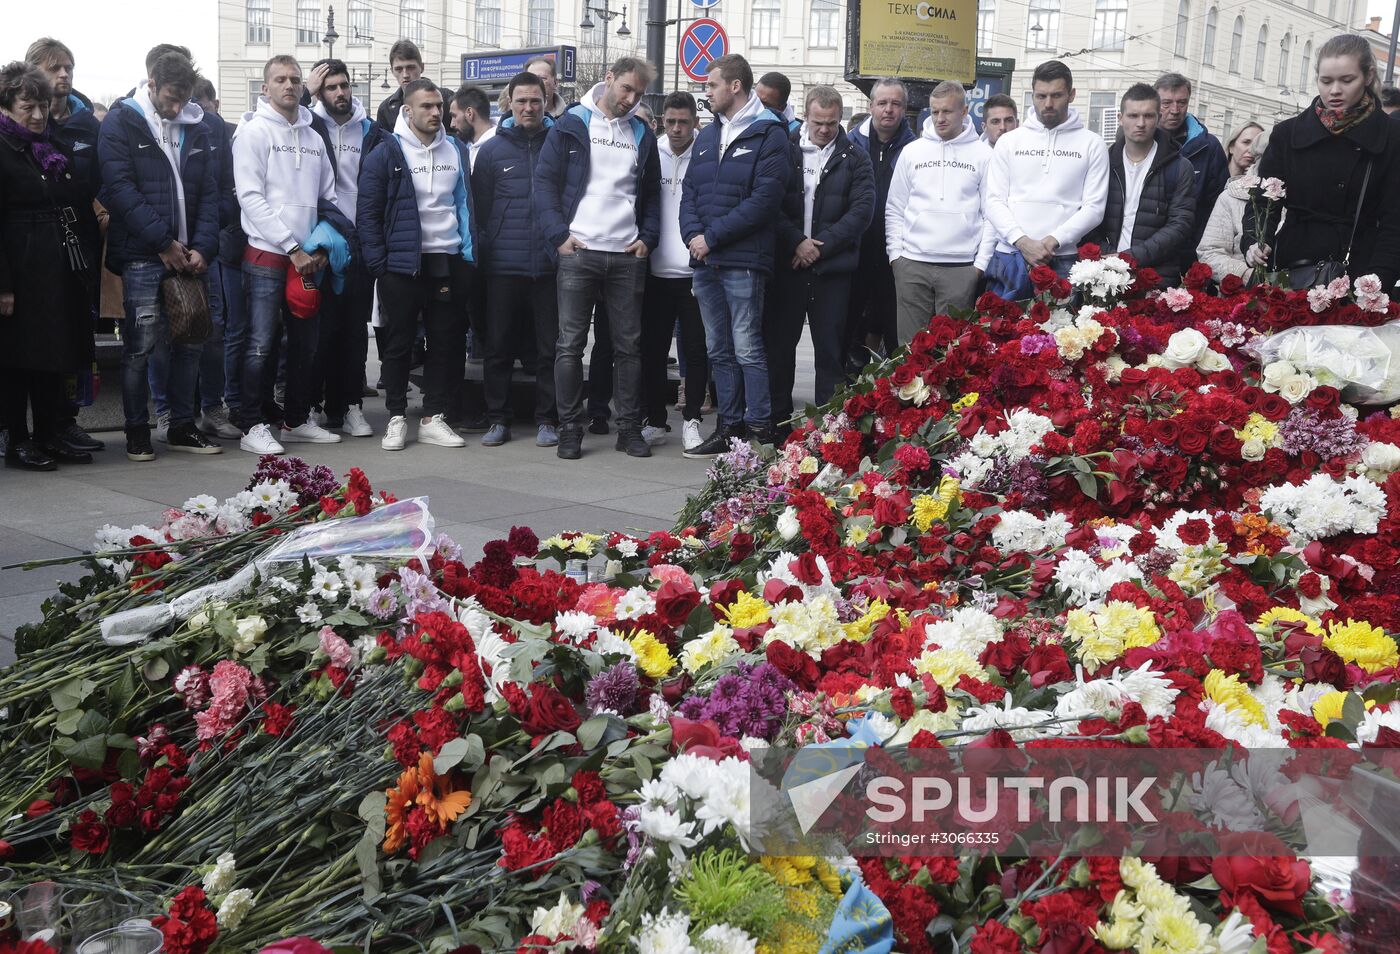 People bring flowers to Tekhnologichesky Institut station